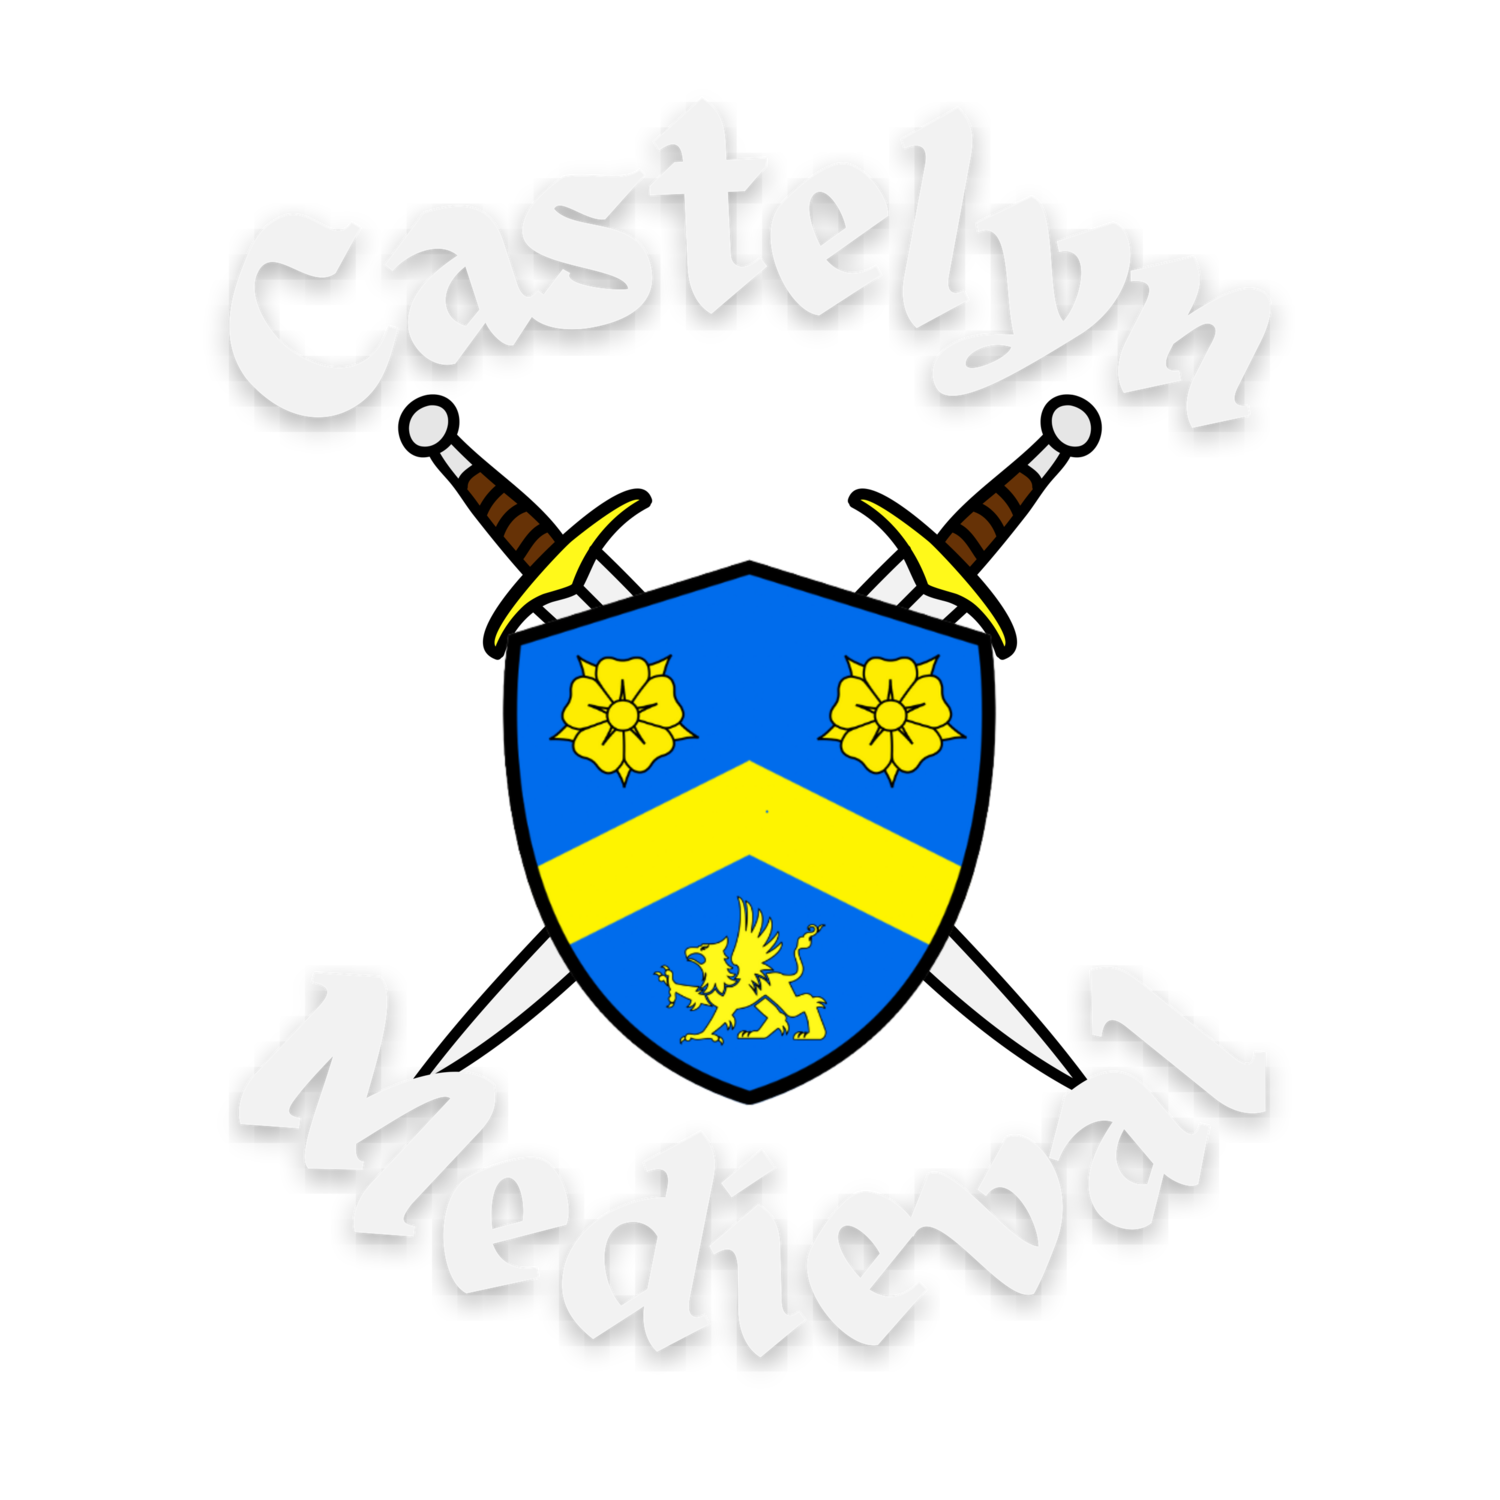 Castelyn Medieval 